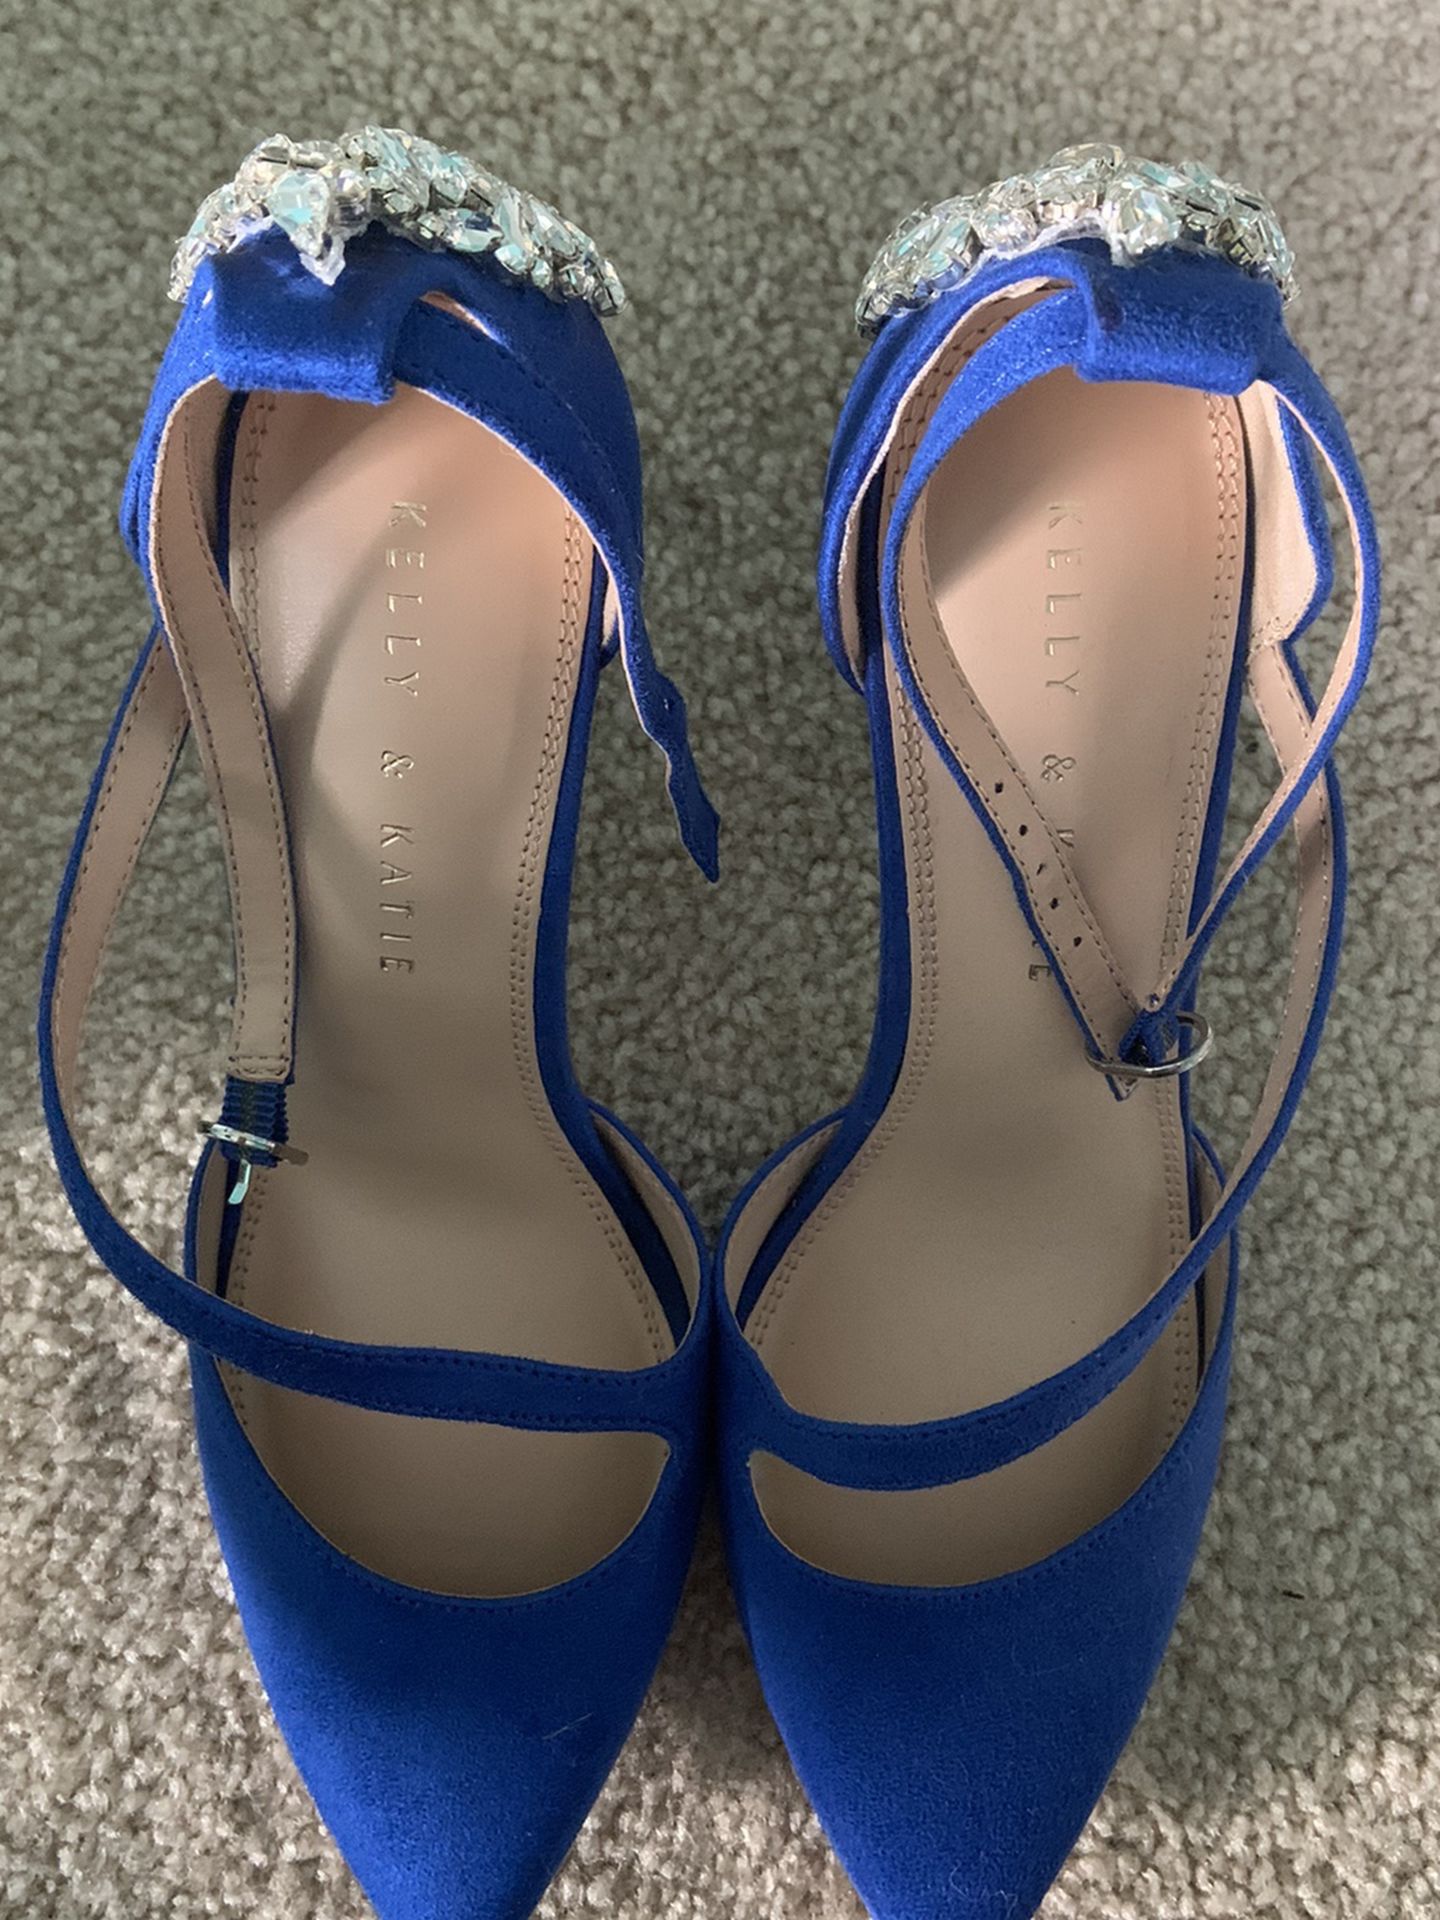 Something Blue - High Heels, Size 8